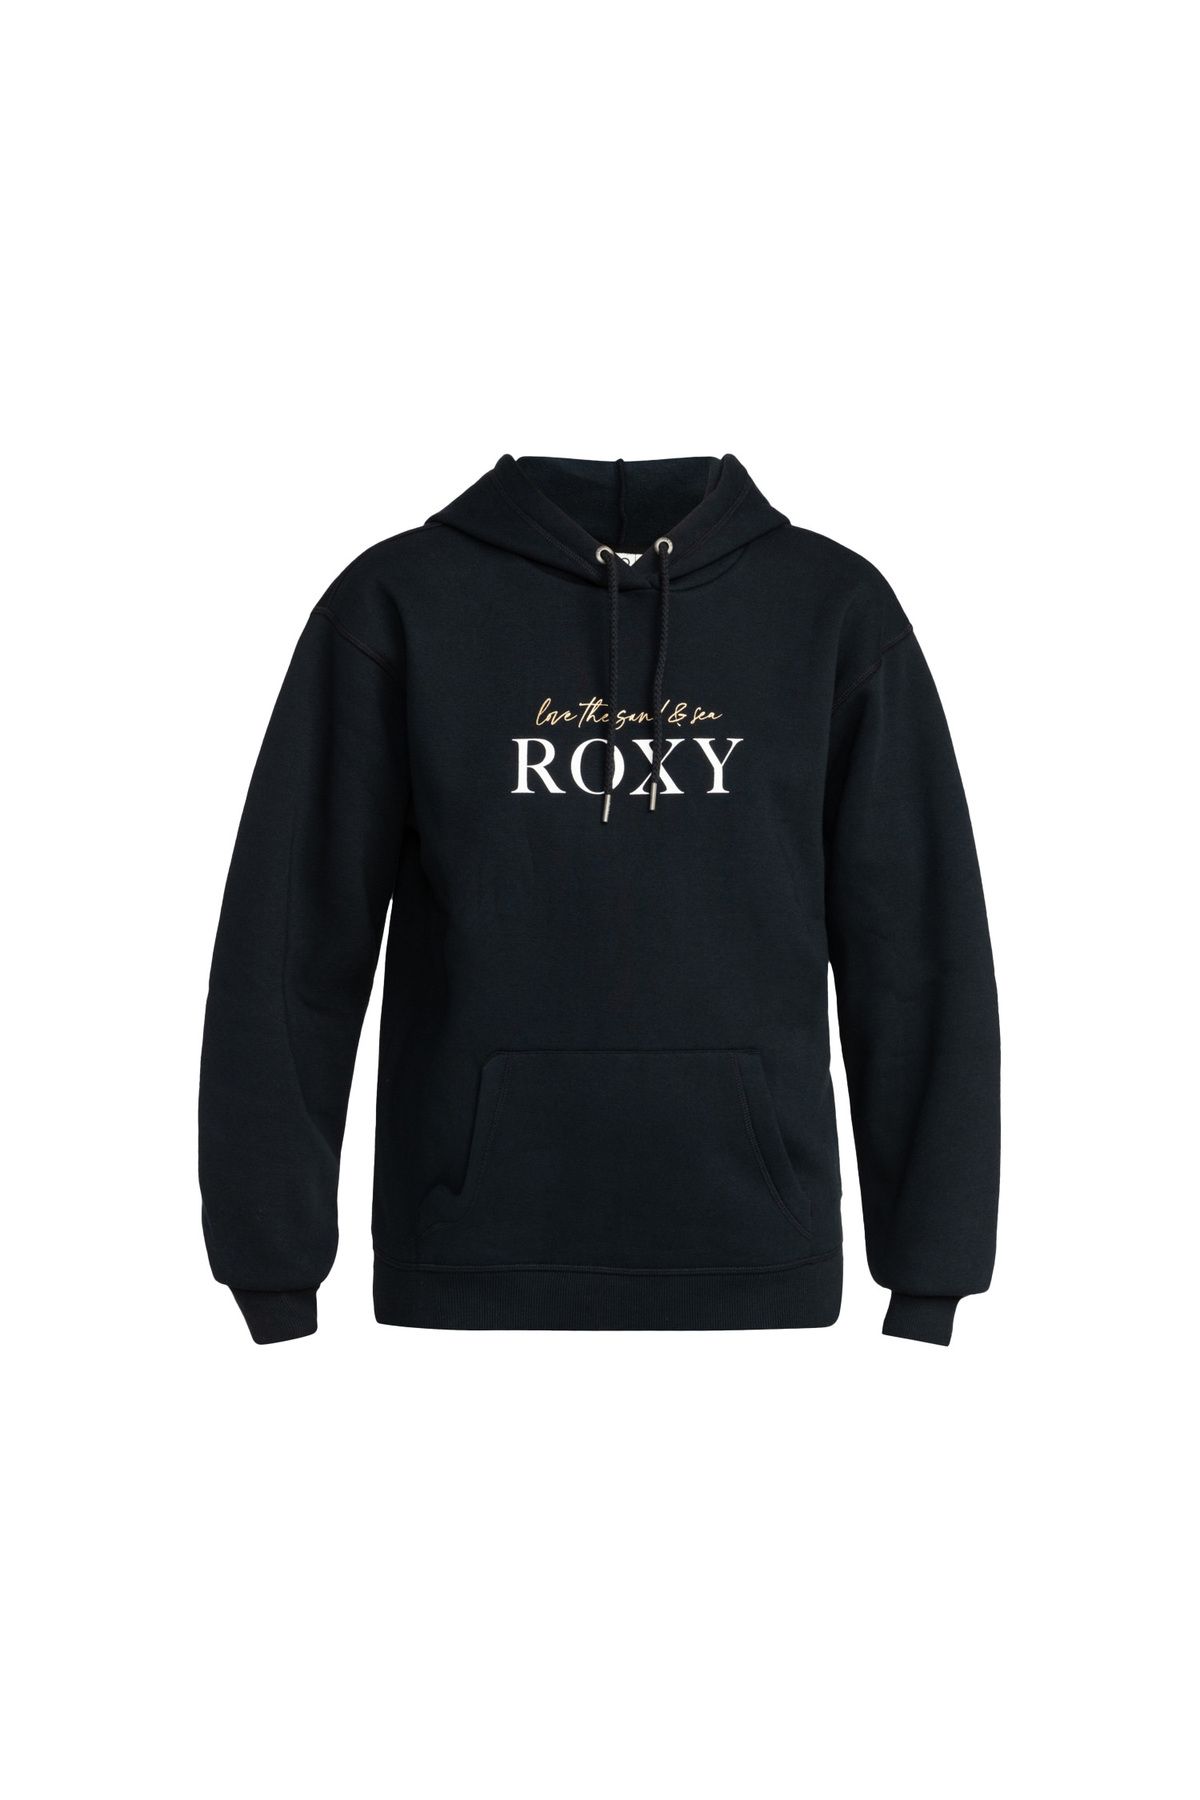 Roxy Surf Stoked Brushed Kadın Kapüşonlu Sweatshirt